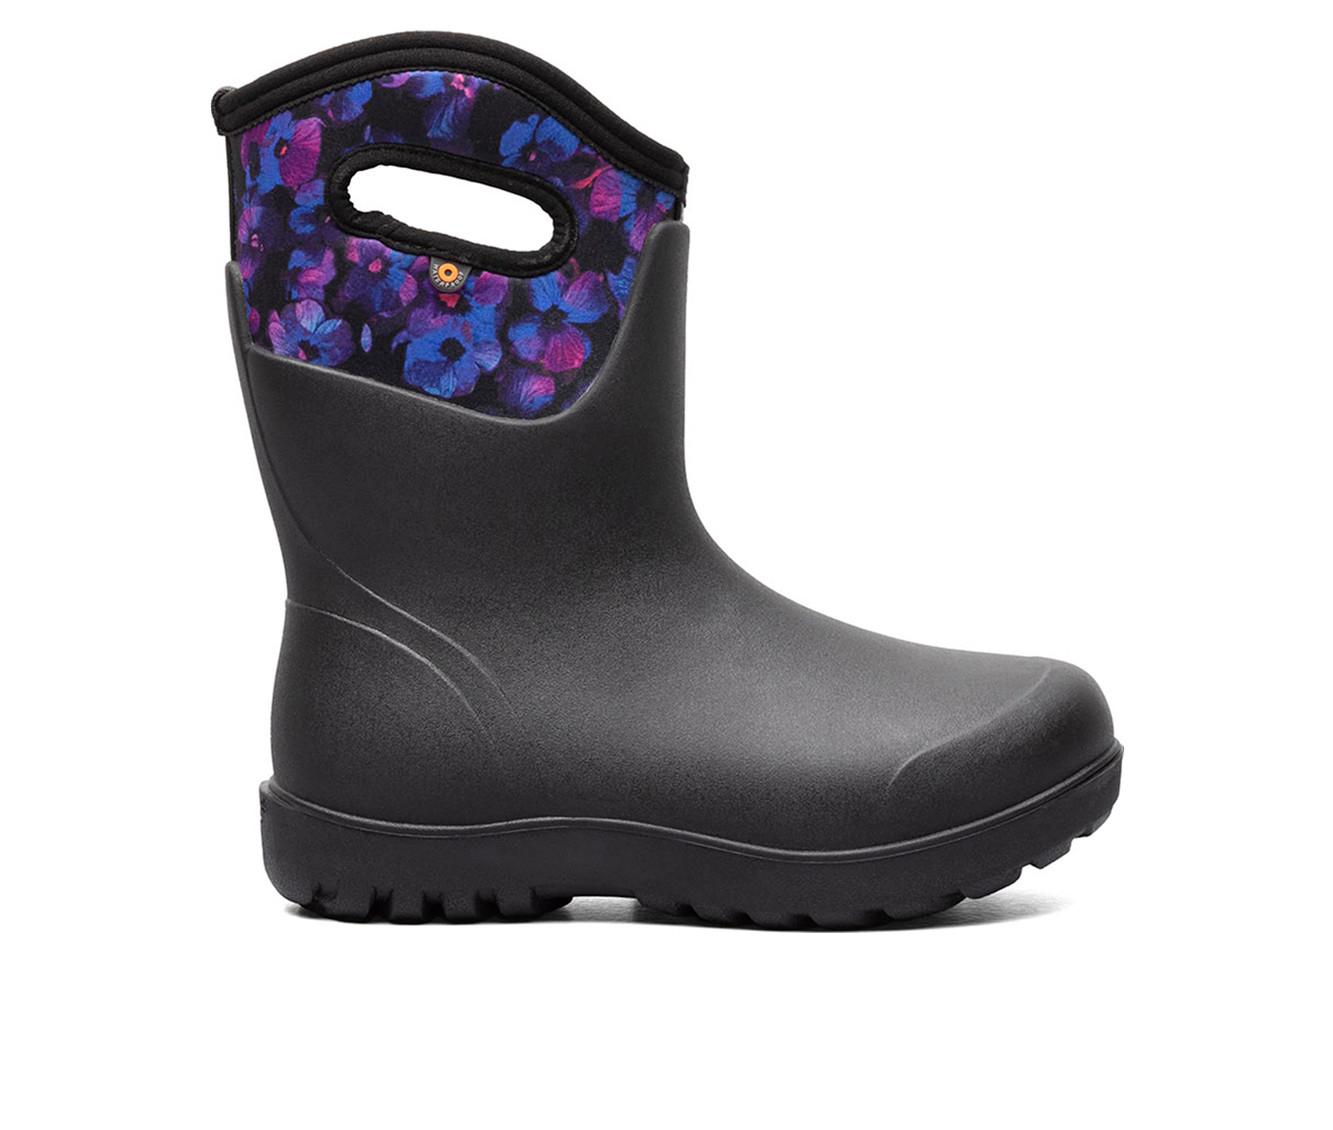 Women's Bogs Footwear Neo Classic Mid Petals Rain Boots